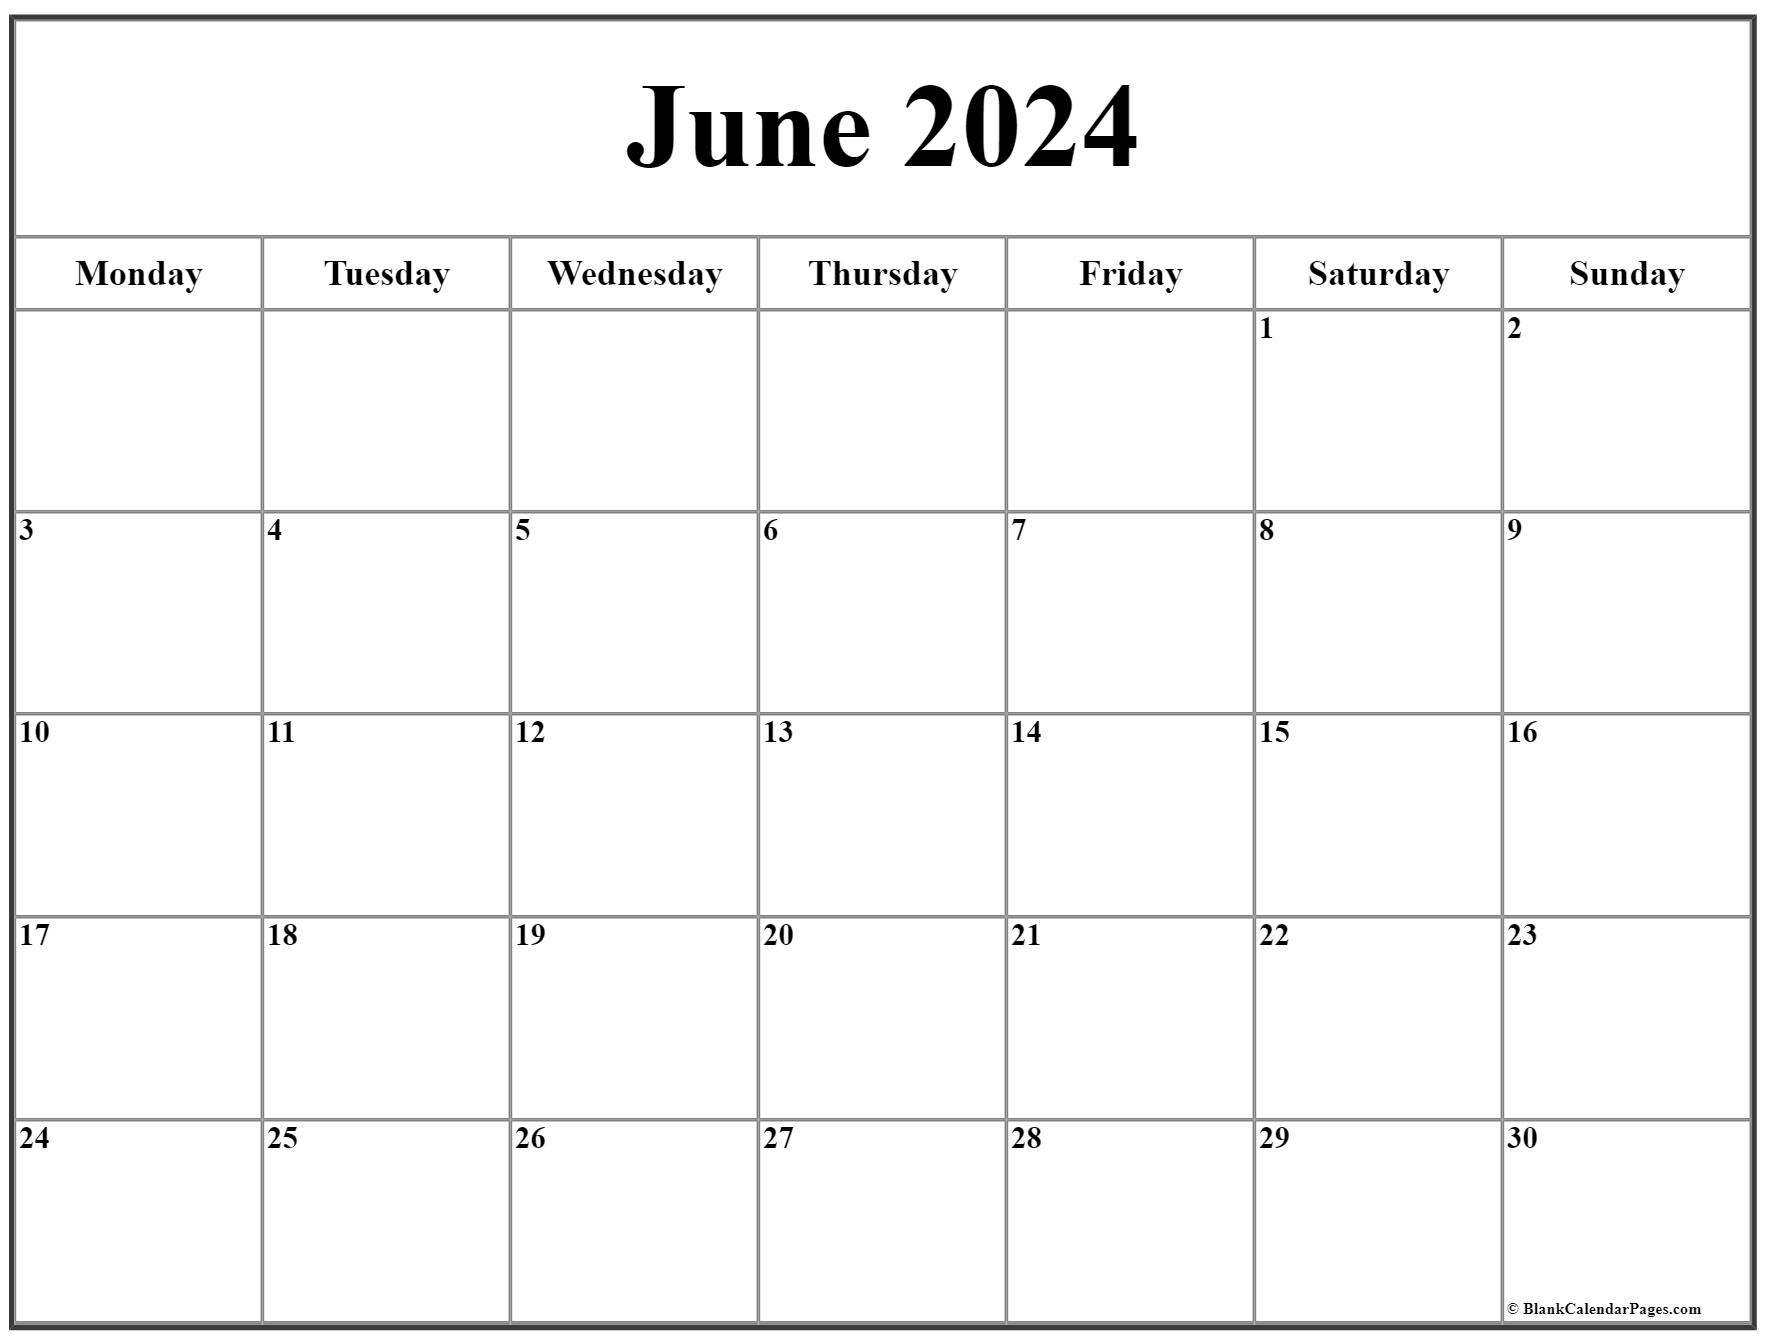 June 2024 Monday Calendar | Monday To Sunday for Calendar Printable June 2024